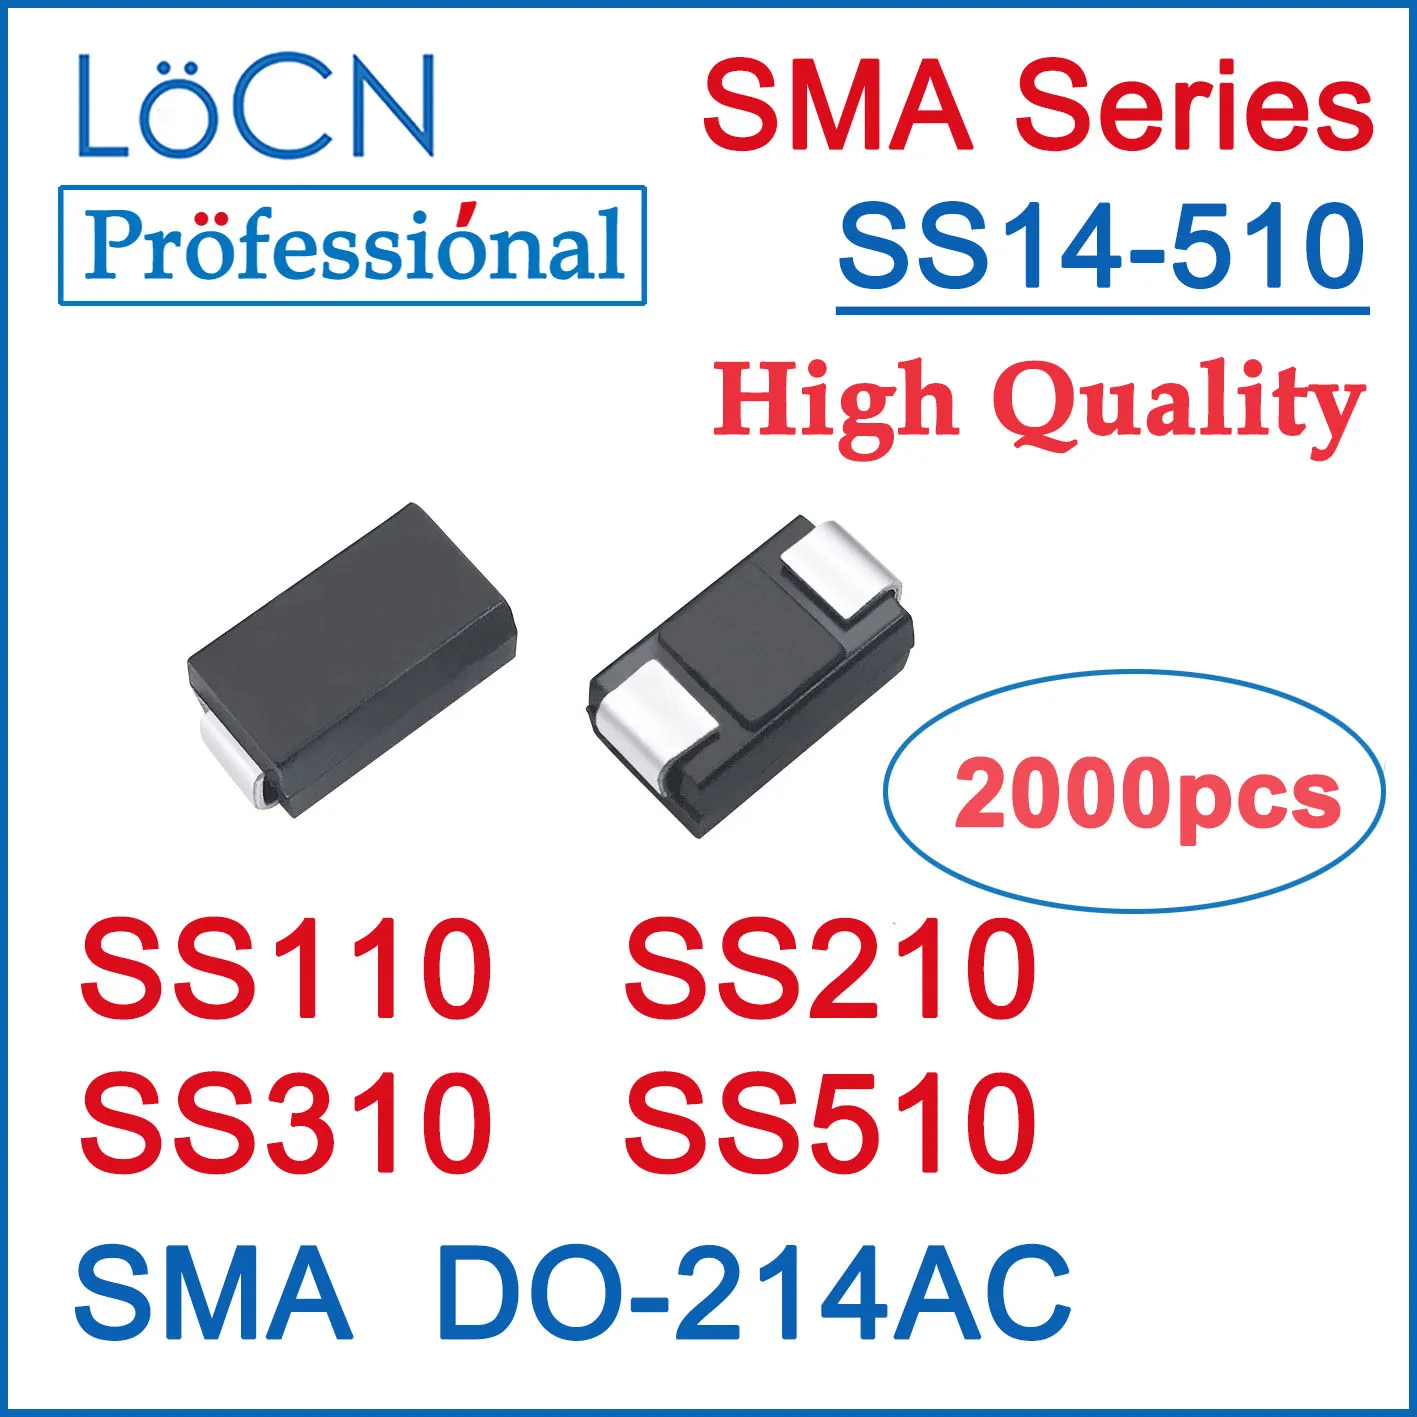 

LOCN 2000PCS SS110 SS210 SS310 SS510 SMA DO-214AC SR3100 SR5100 SR1100 SR2100 100V 1A 2A 3A 5A High Quality Big Chip Current